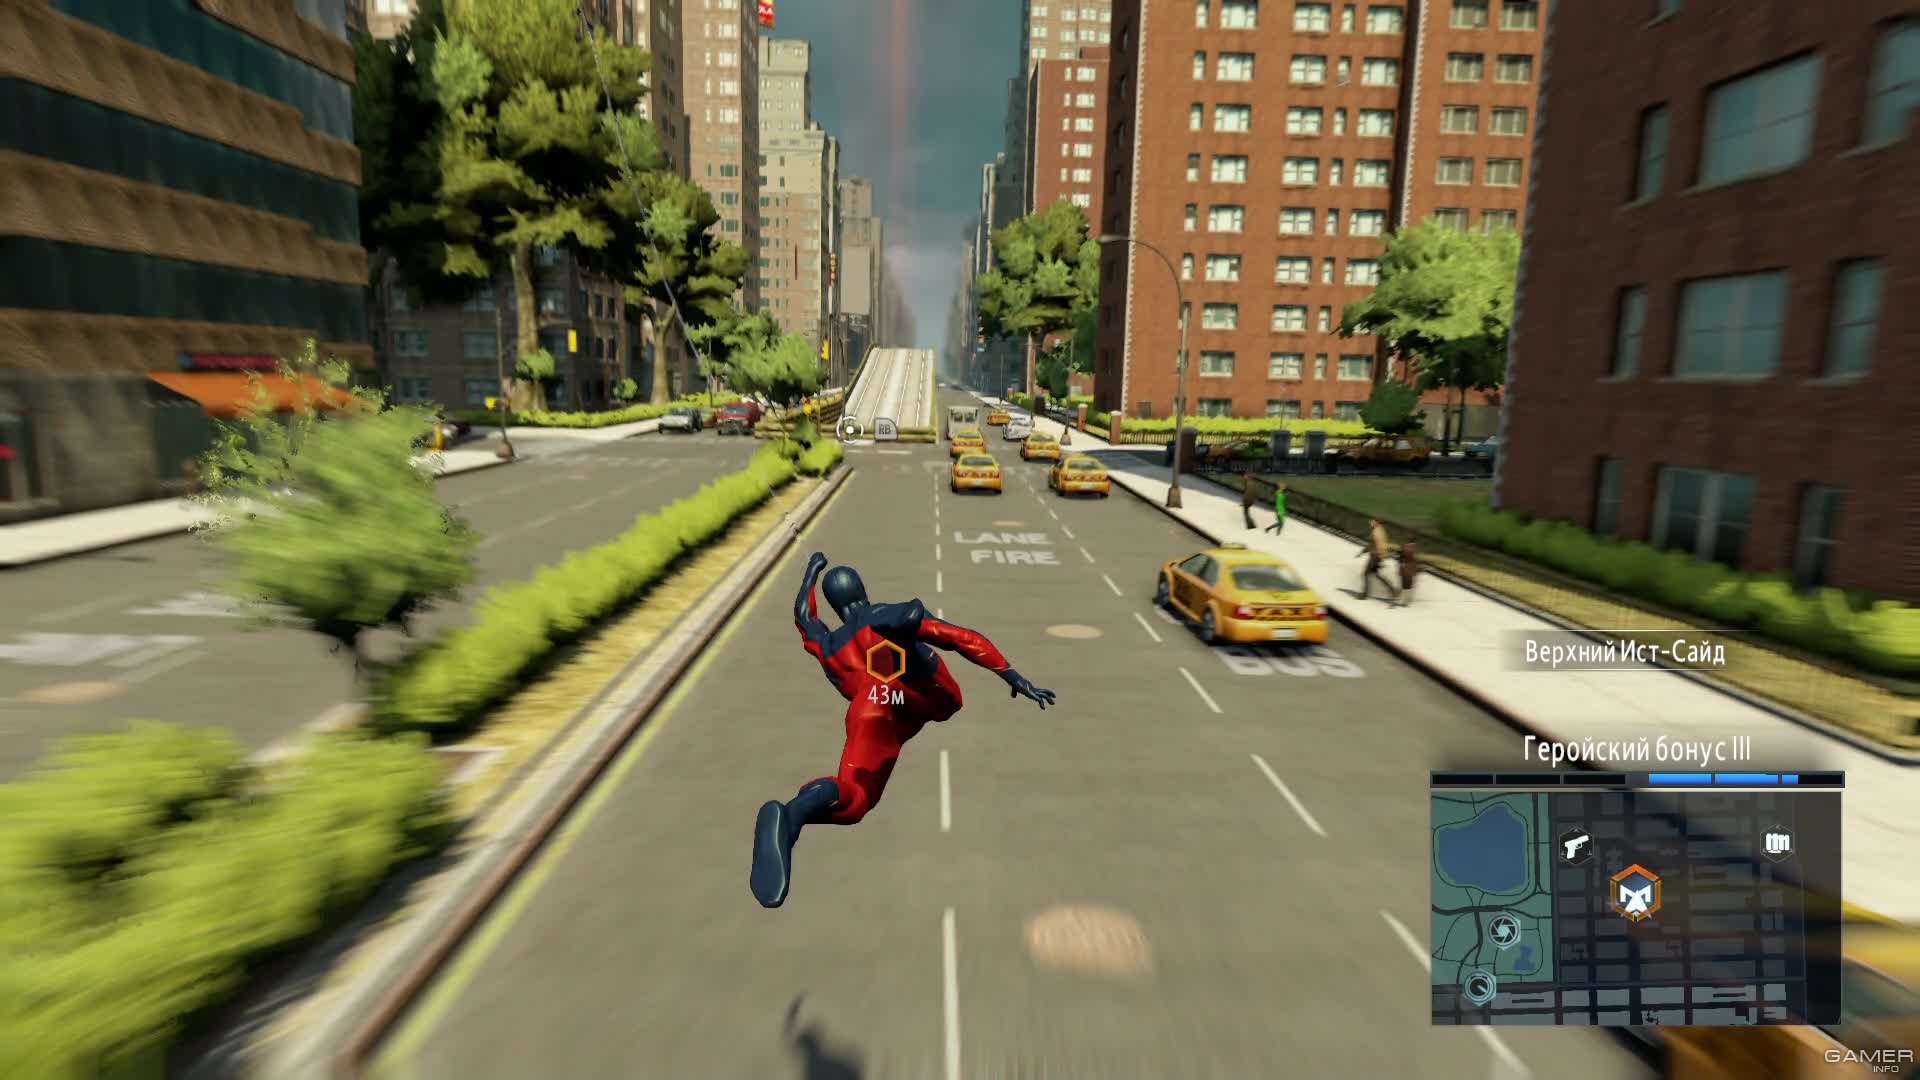 Spider man game pc. The amazing Spider-man 2 (игра, 2014). Человек паук амазинг 2 игра. The amazing Spider-man 3 игра. Spider man 2014 игра.